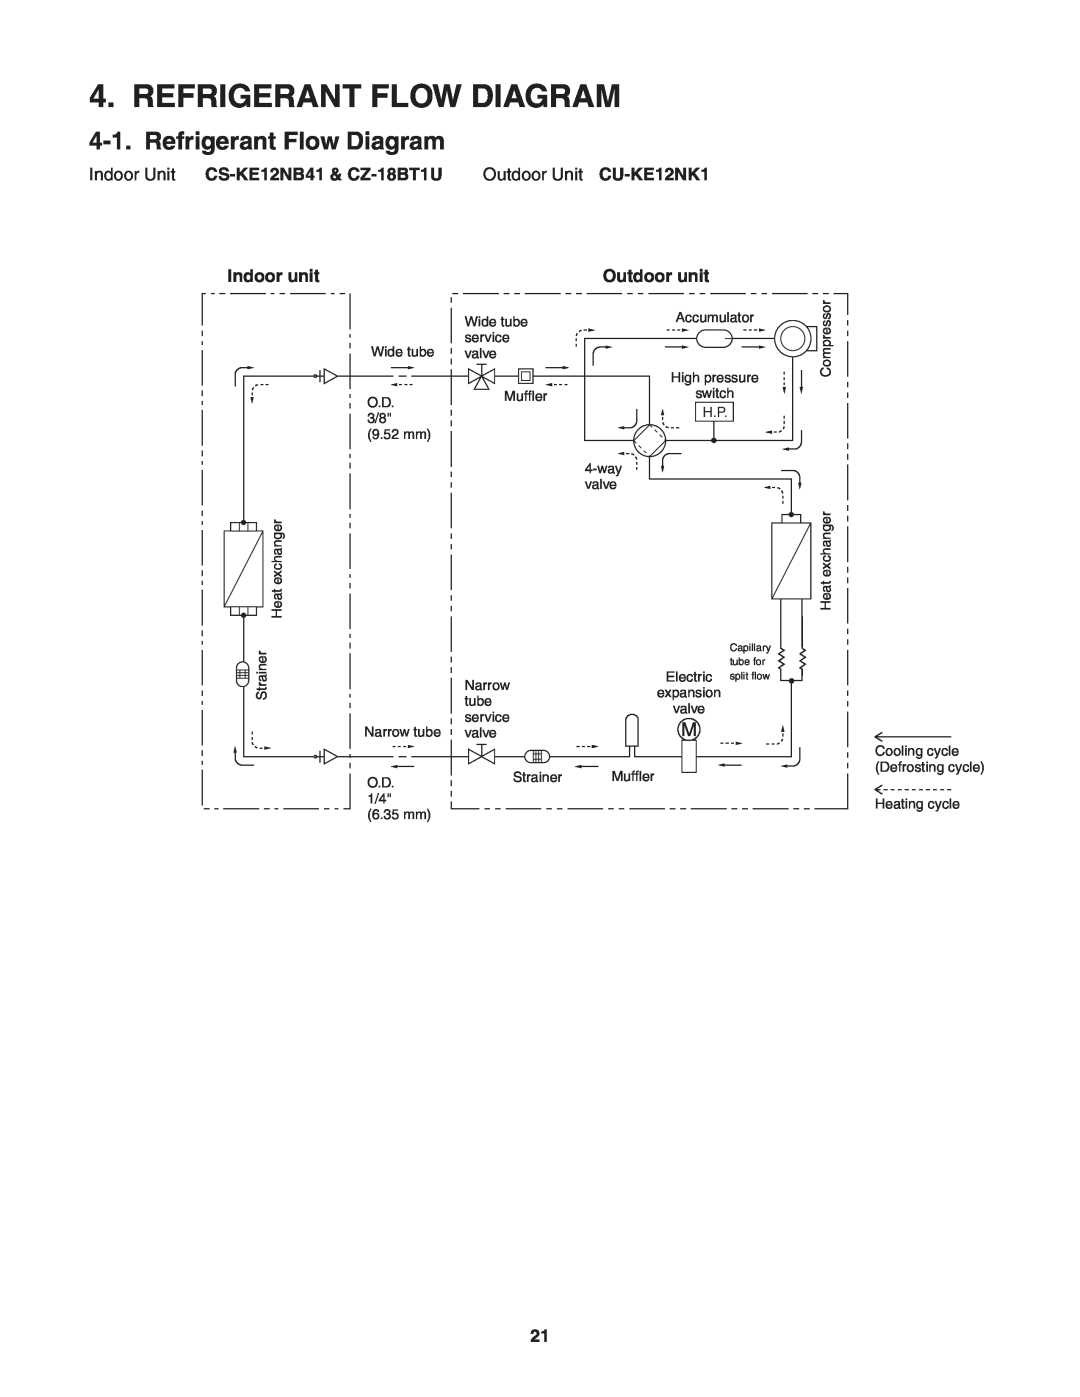 Panasonic CU-KE18NKU, CU-KE12NK1, CS-KE18NB4UW, CS-KE12NB41, CZ-18BT1U service manual Refrigerant Flow Diagram 